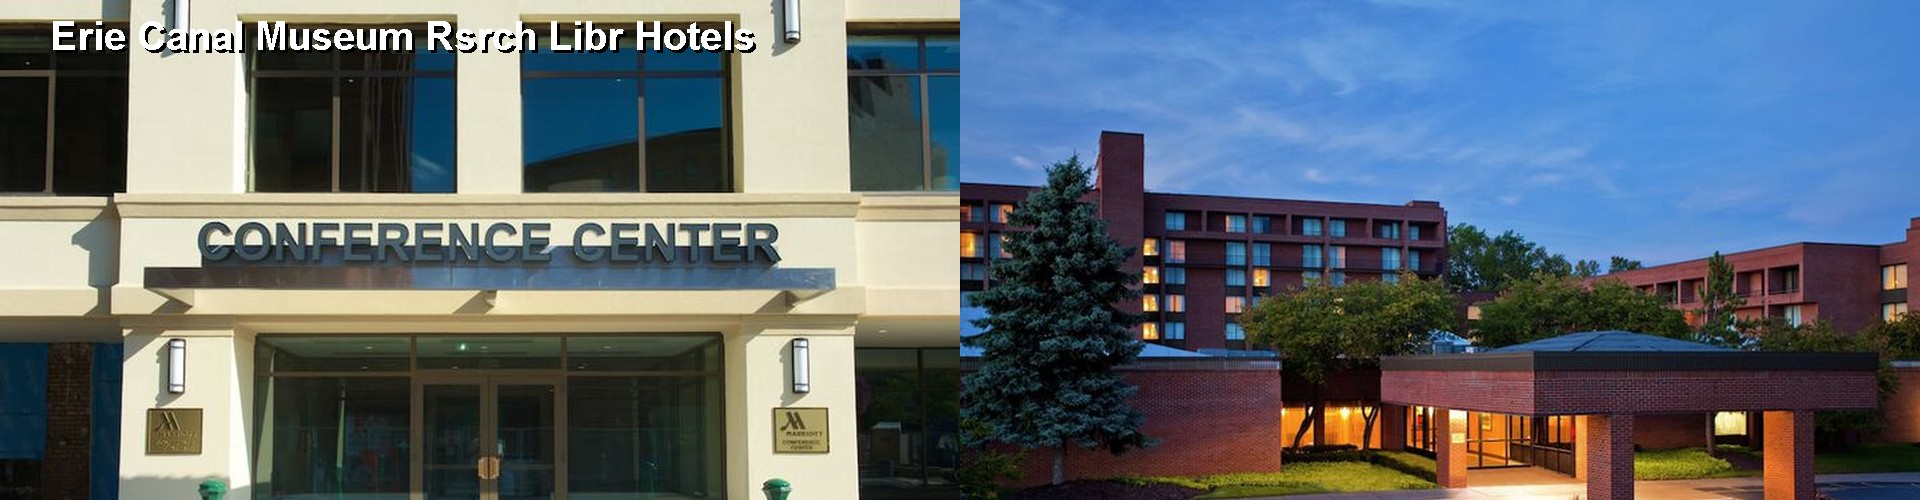 5 Best Hotels near Erie Canal Museum Rsrch Libr